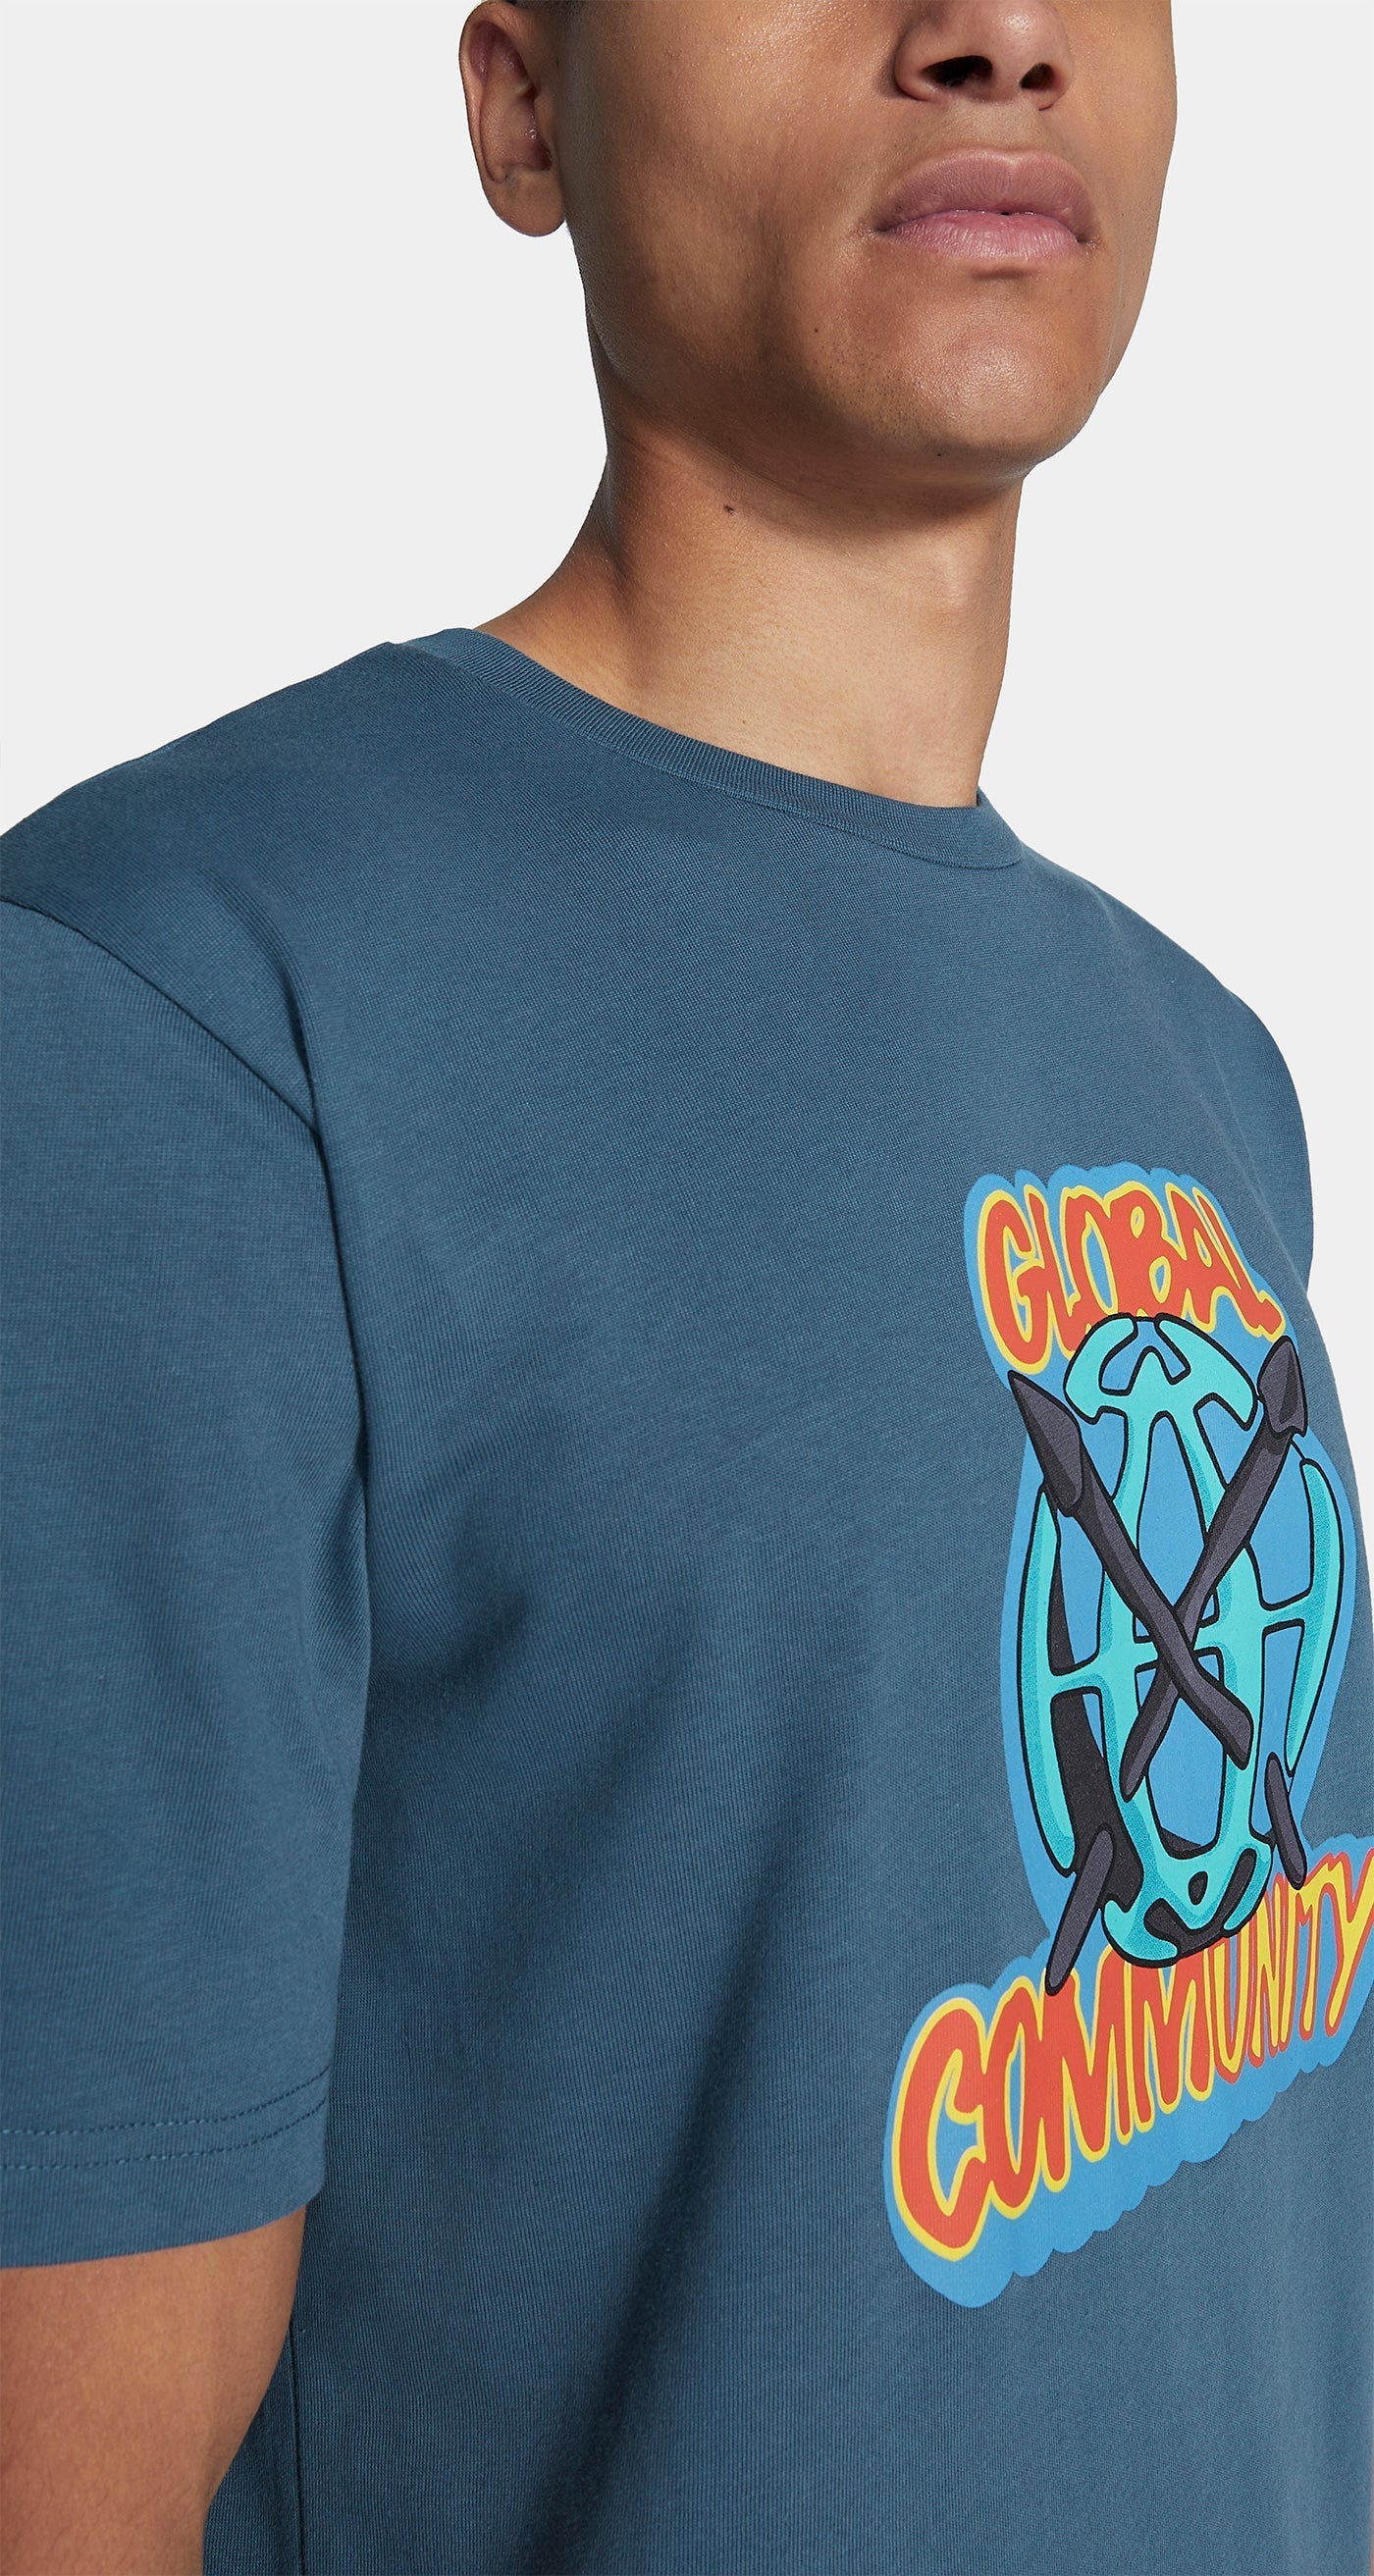 DP - Teal Blue Hobal T-Shirt - Men